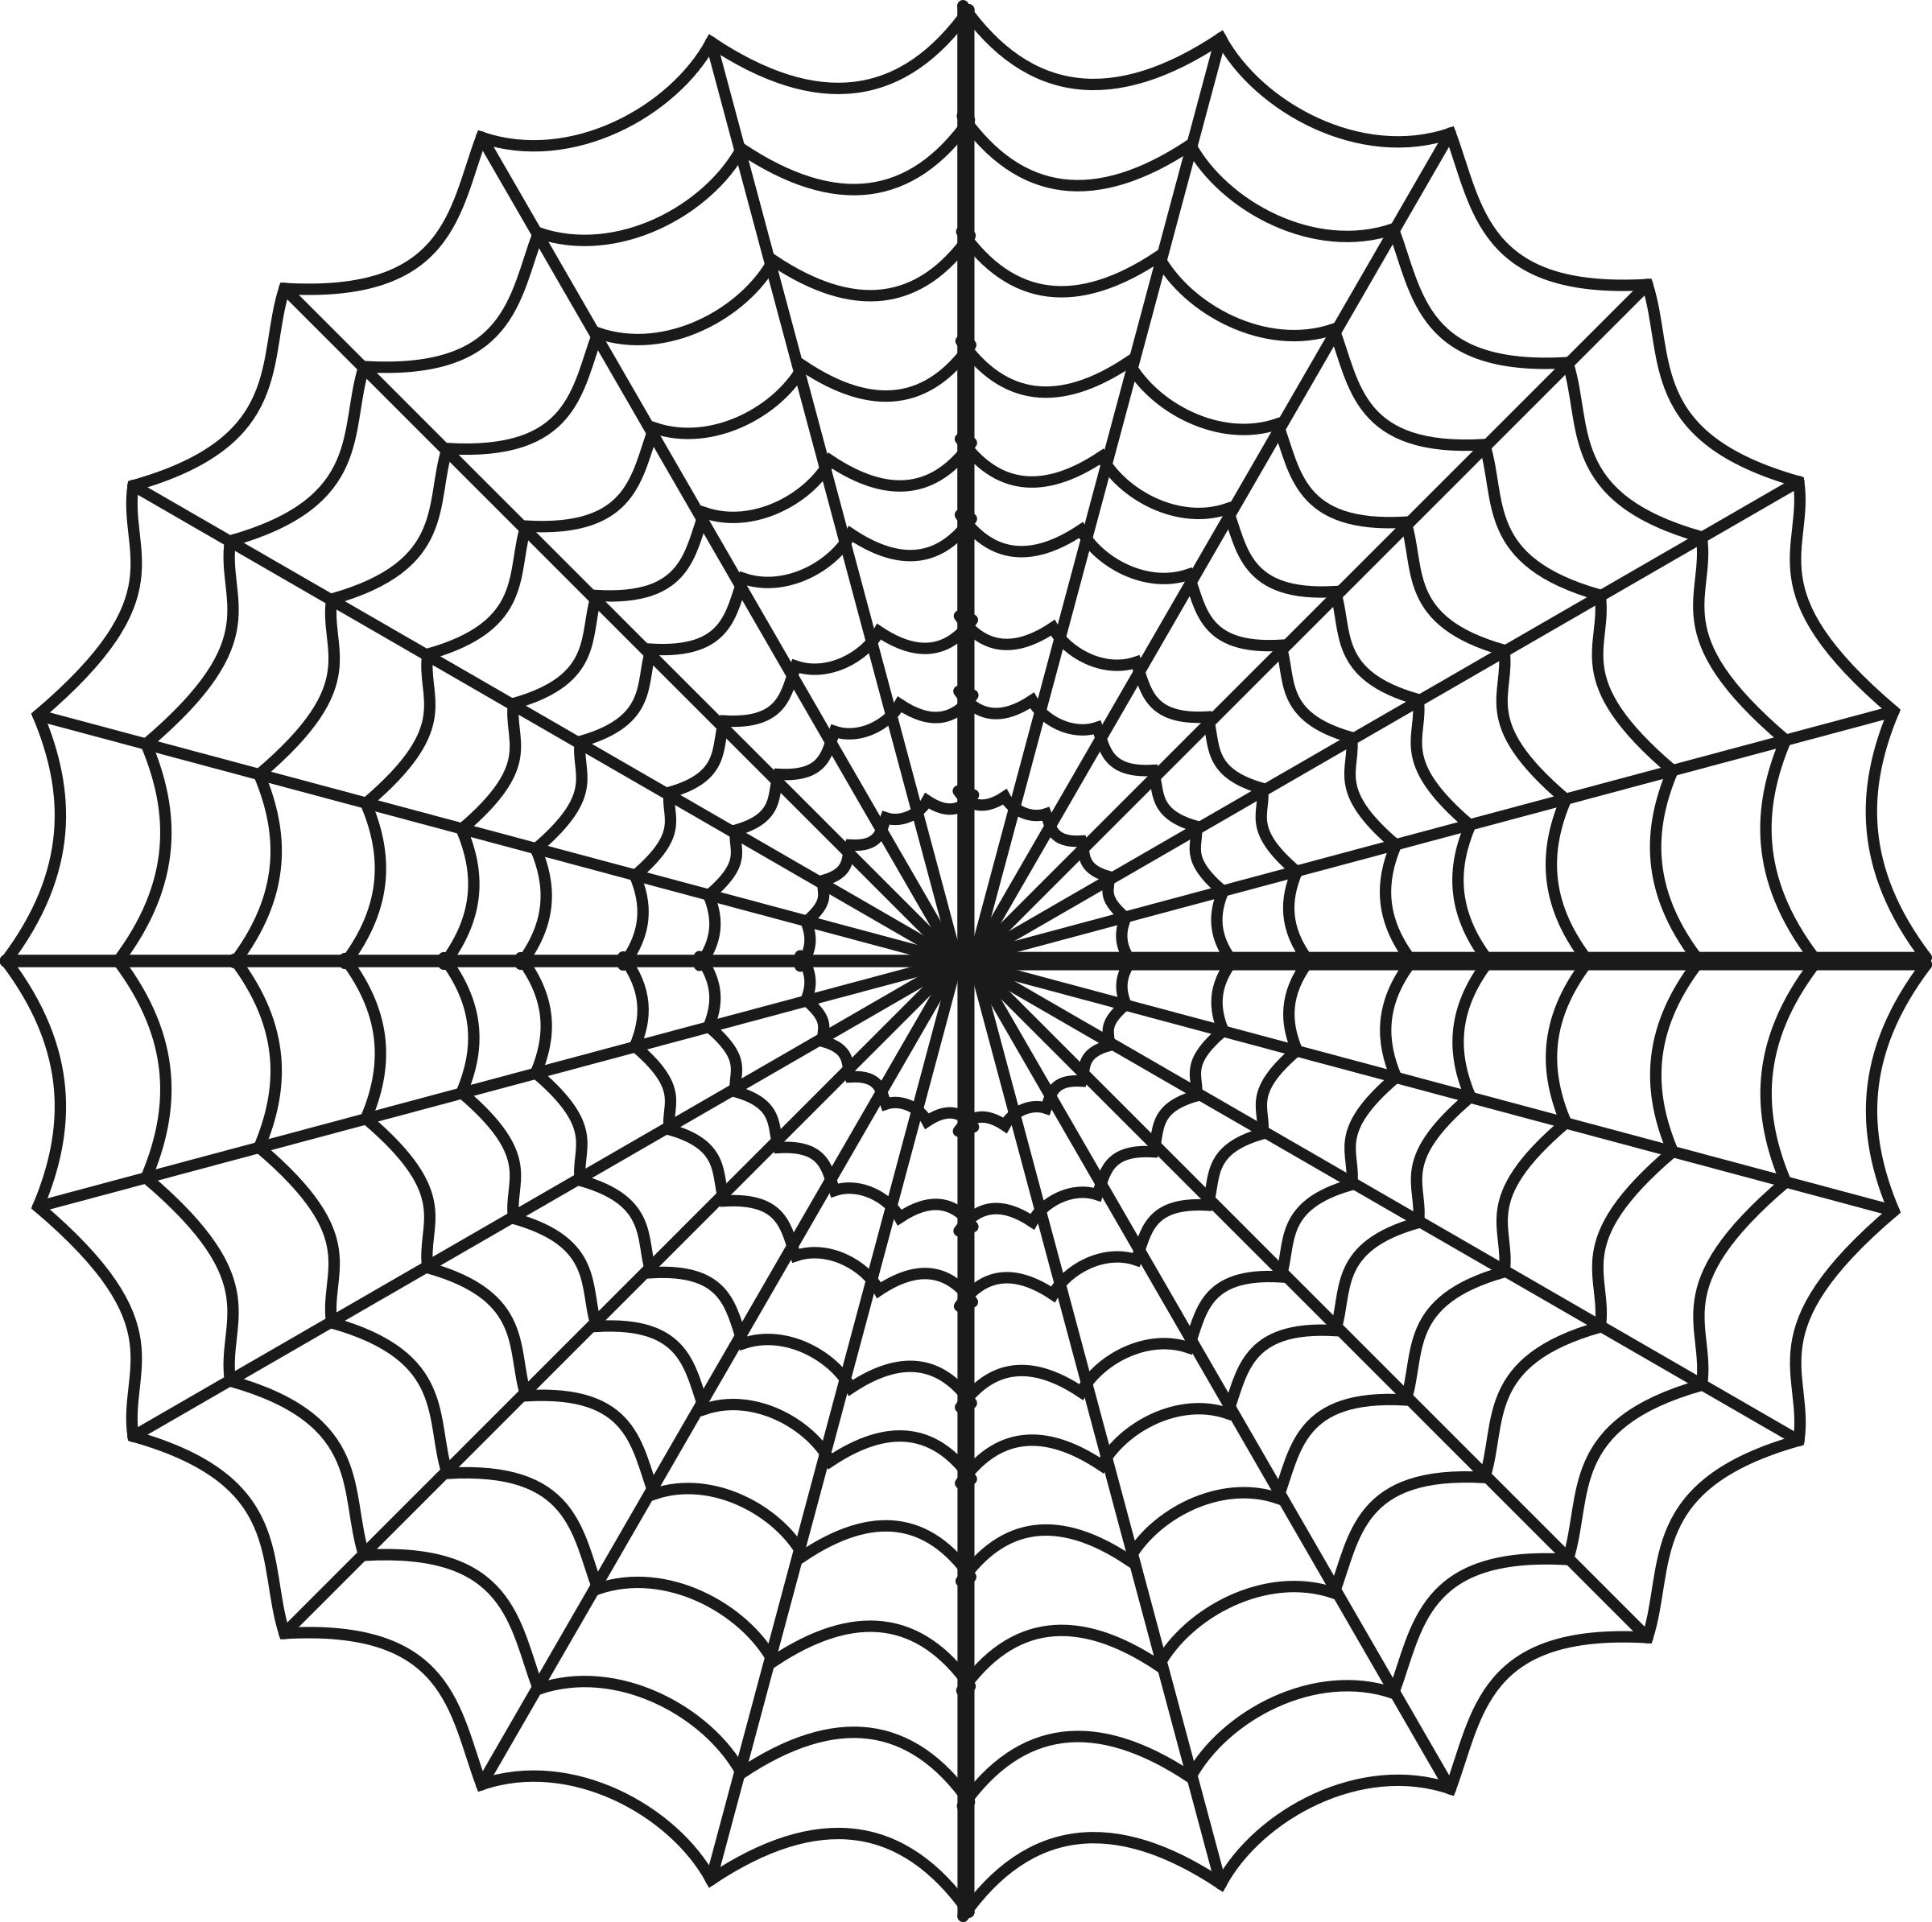 Free Spider Man Web Png, Download Free Spider Man Web Png png images ...